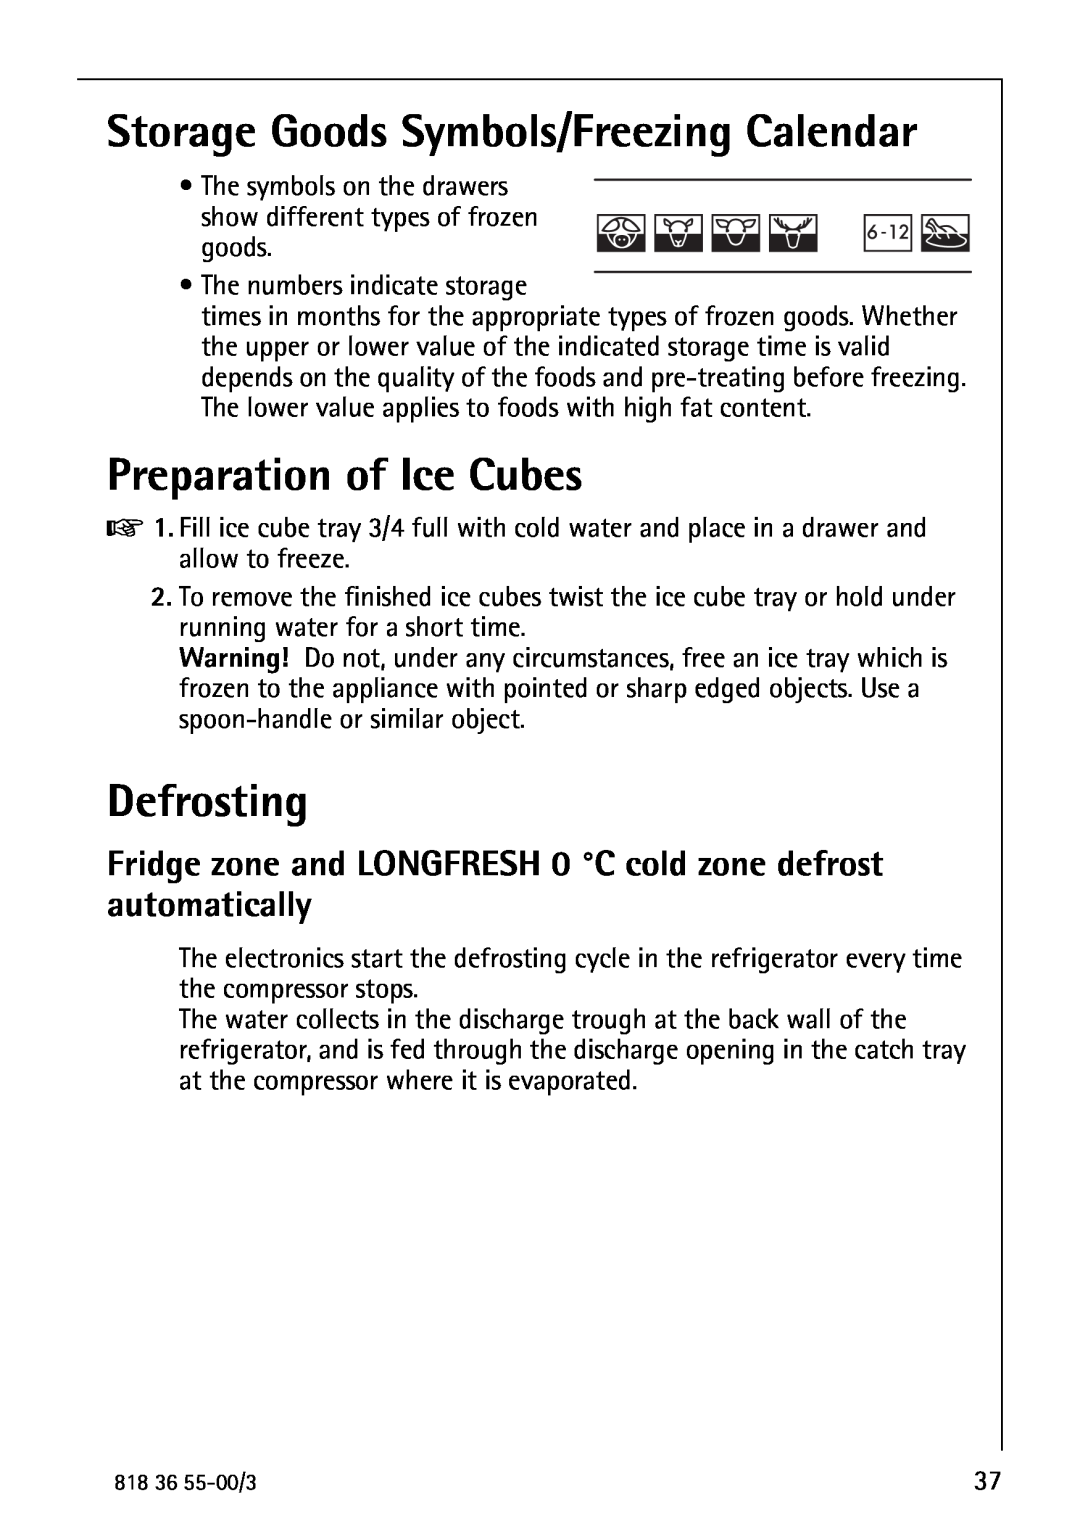 AEG 86378-KG operating instructions Storage Goods Symbols/Freezing Calendar, Preparation of Ice Cubes, Defrosting 